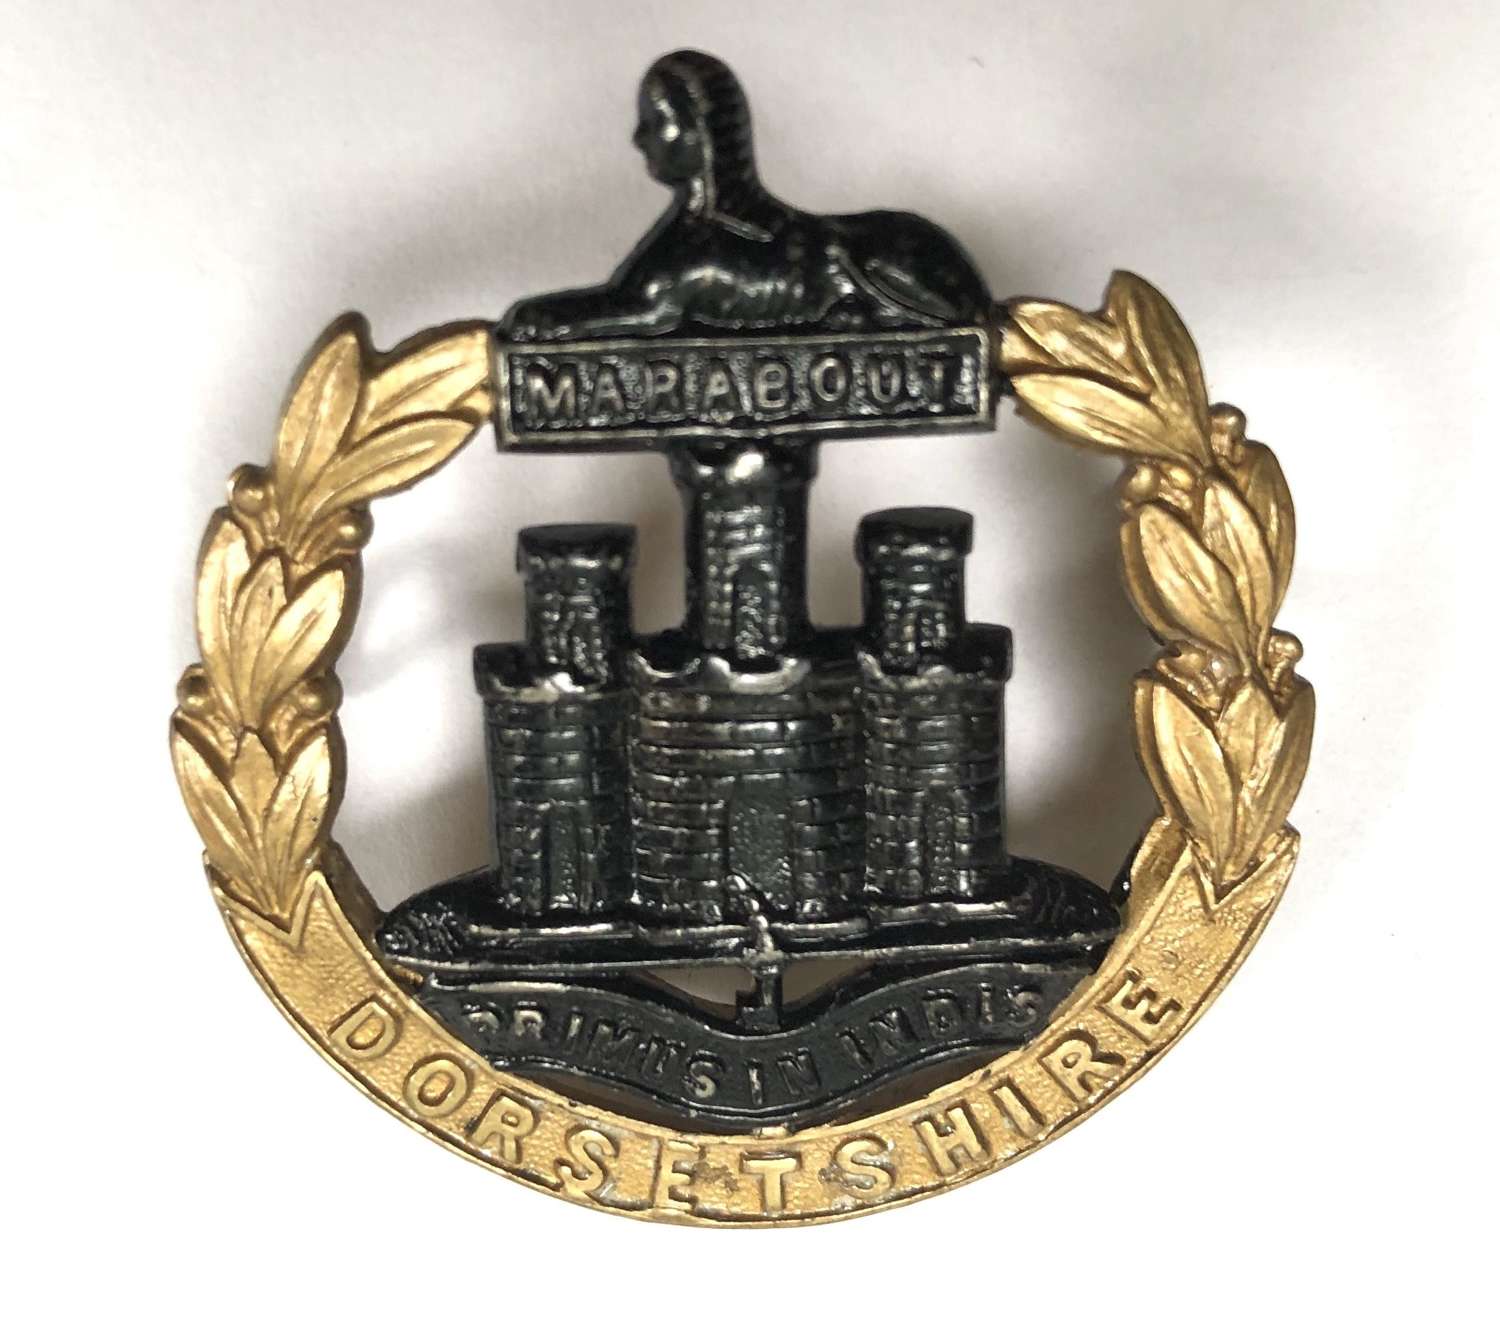 Dorsetshire Regiment Officer's cap badge c1900-51 by JR Gaunt London